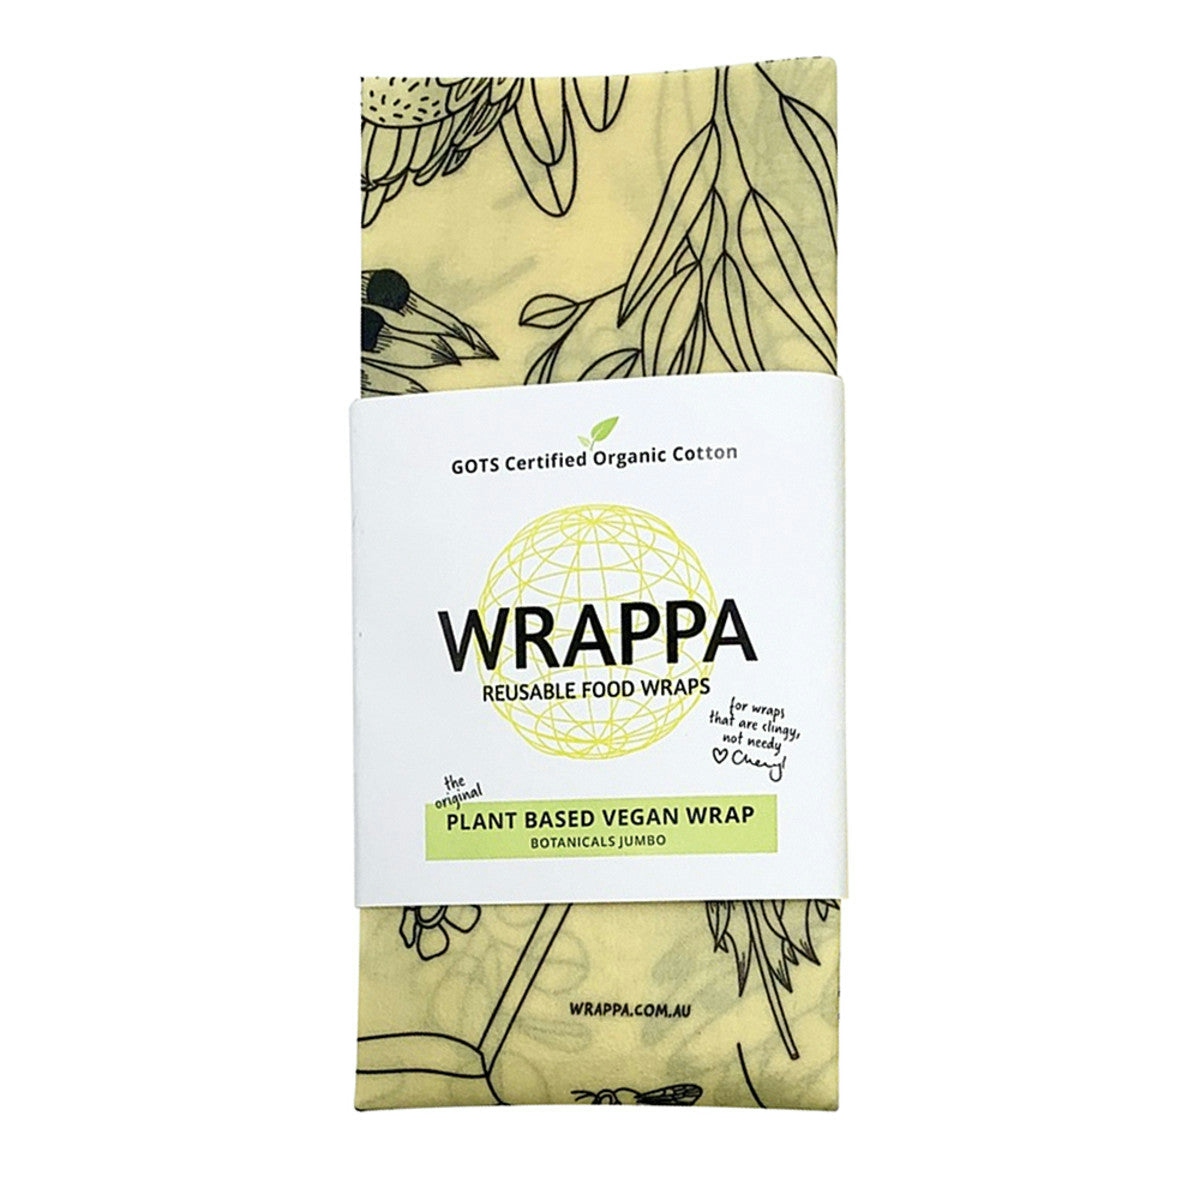 image of WRAPPA Reusable Food Wrap Vegan Botanicals Large on white background